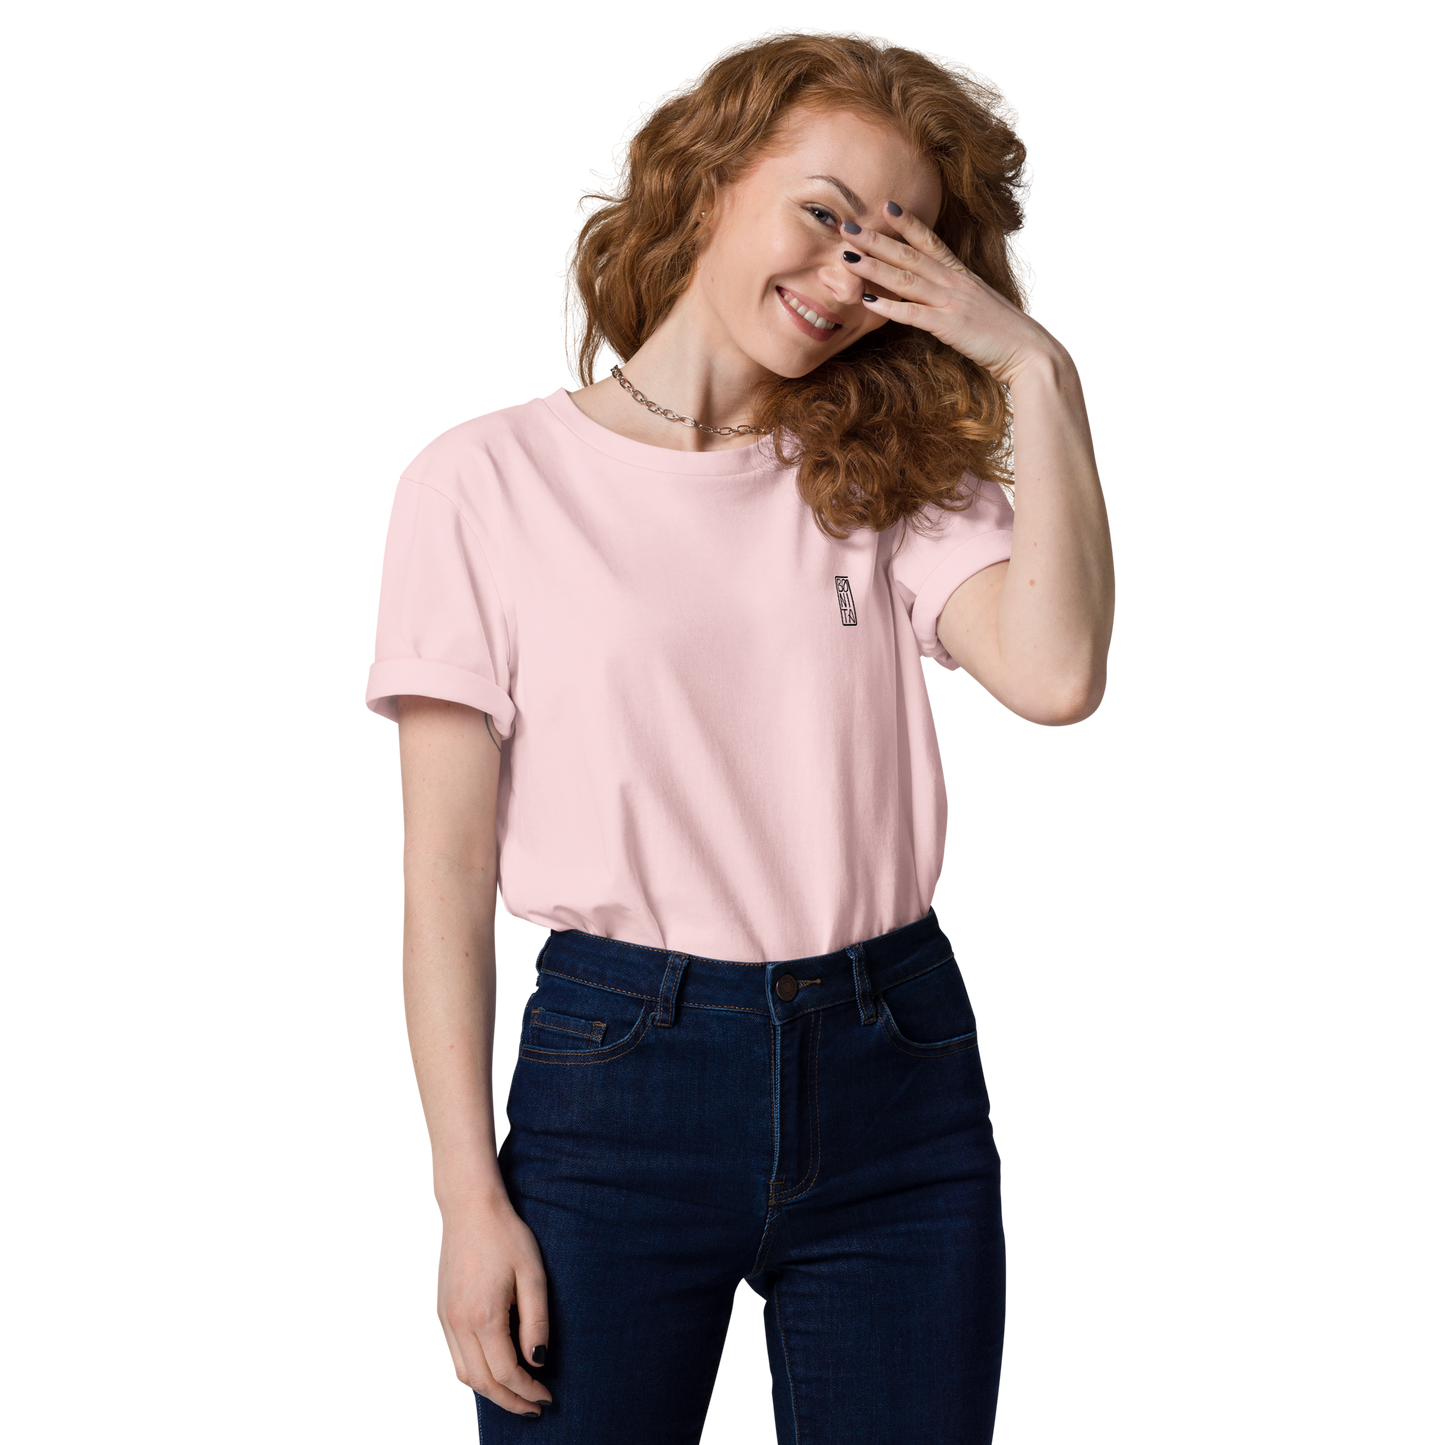 Karleth Dinner Unisex T-Shirt - Pink